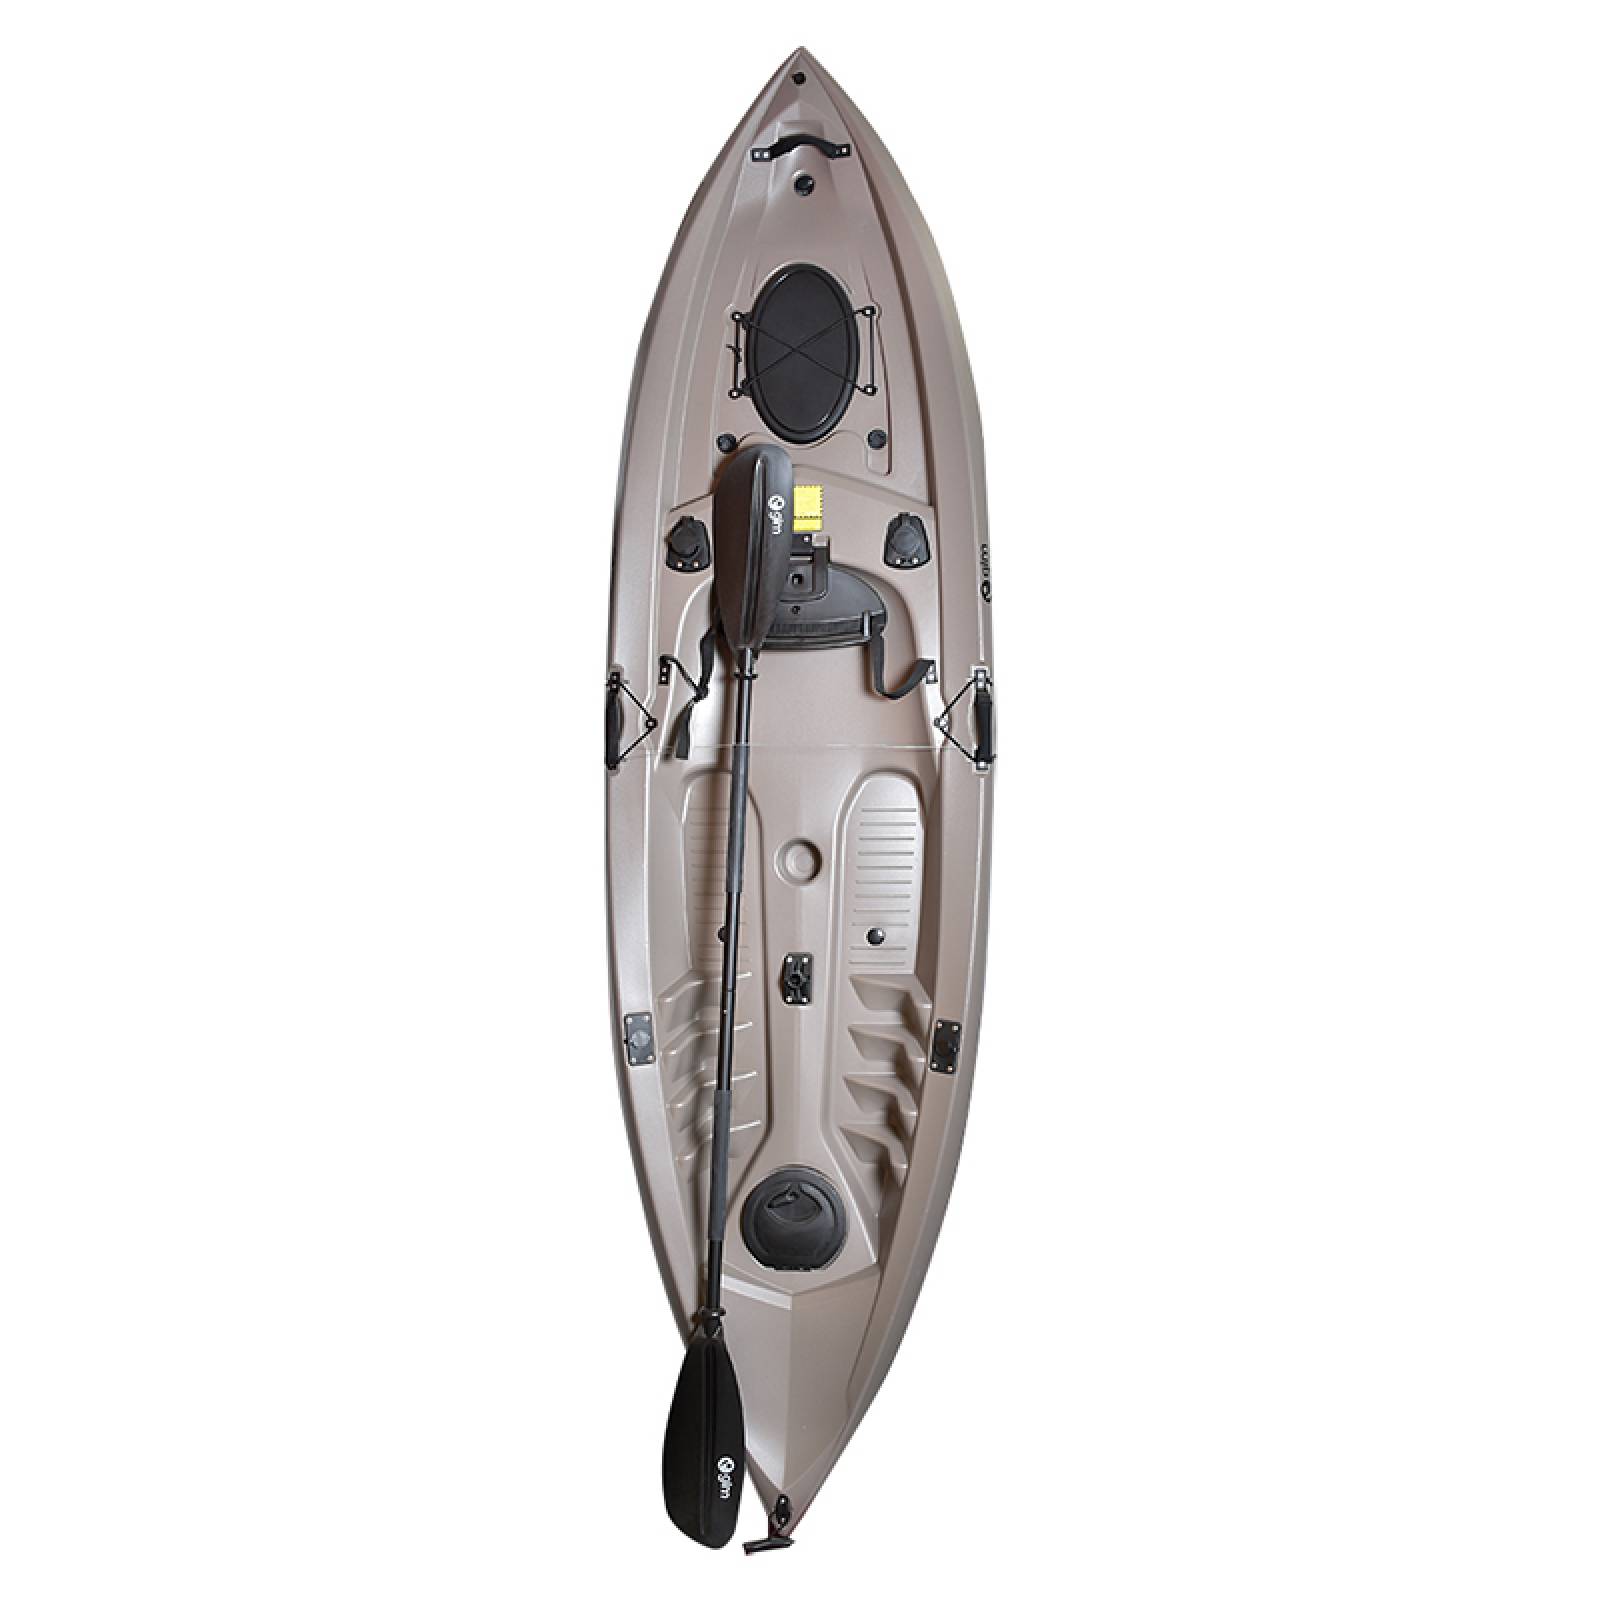 Kayak Polietileno Pesca 1 Persona 305cm 125Kg Gris Gimbel